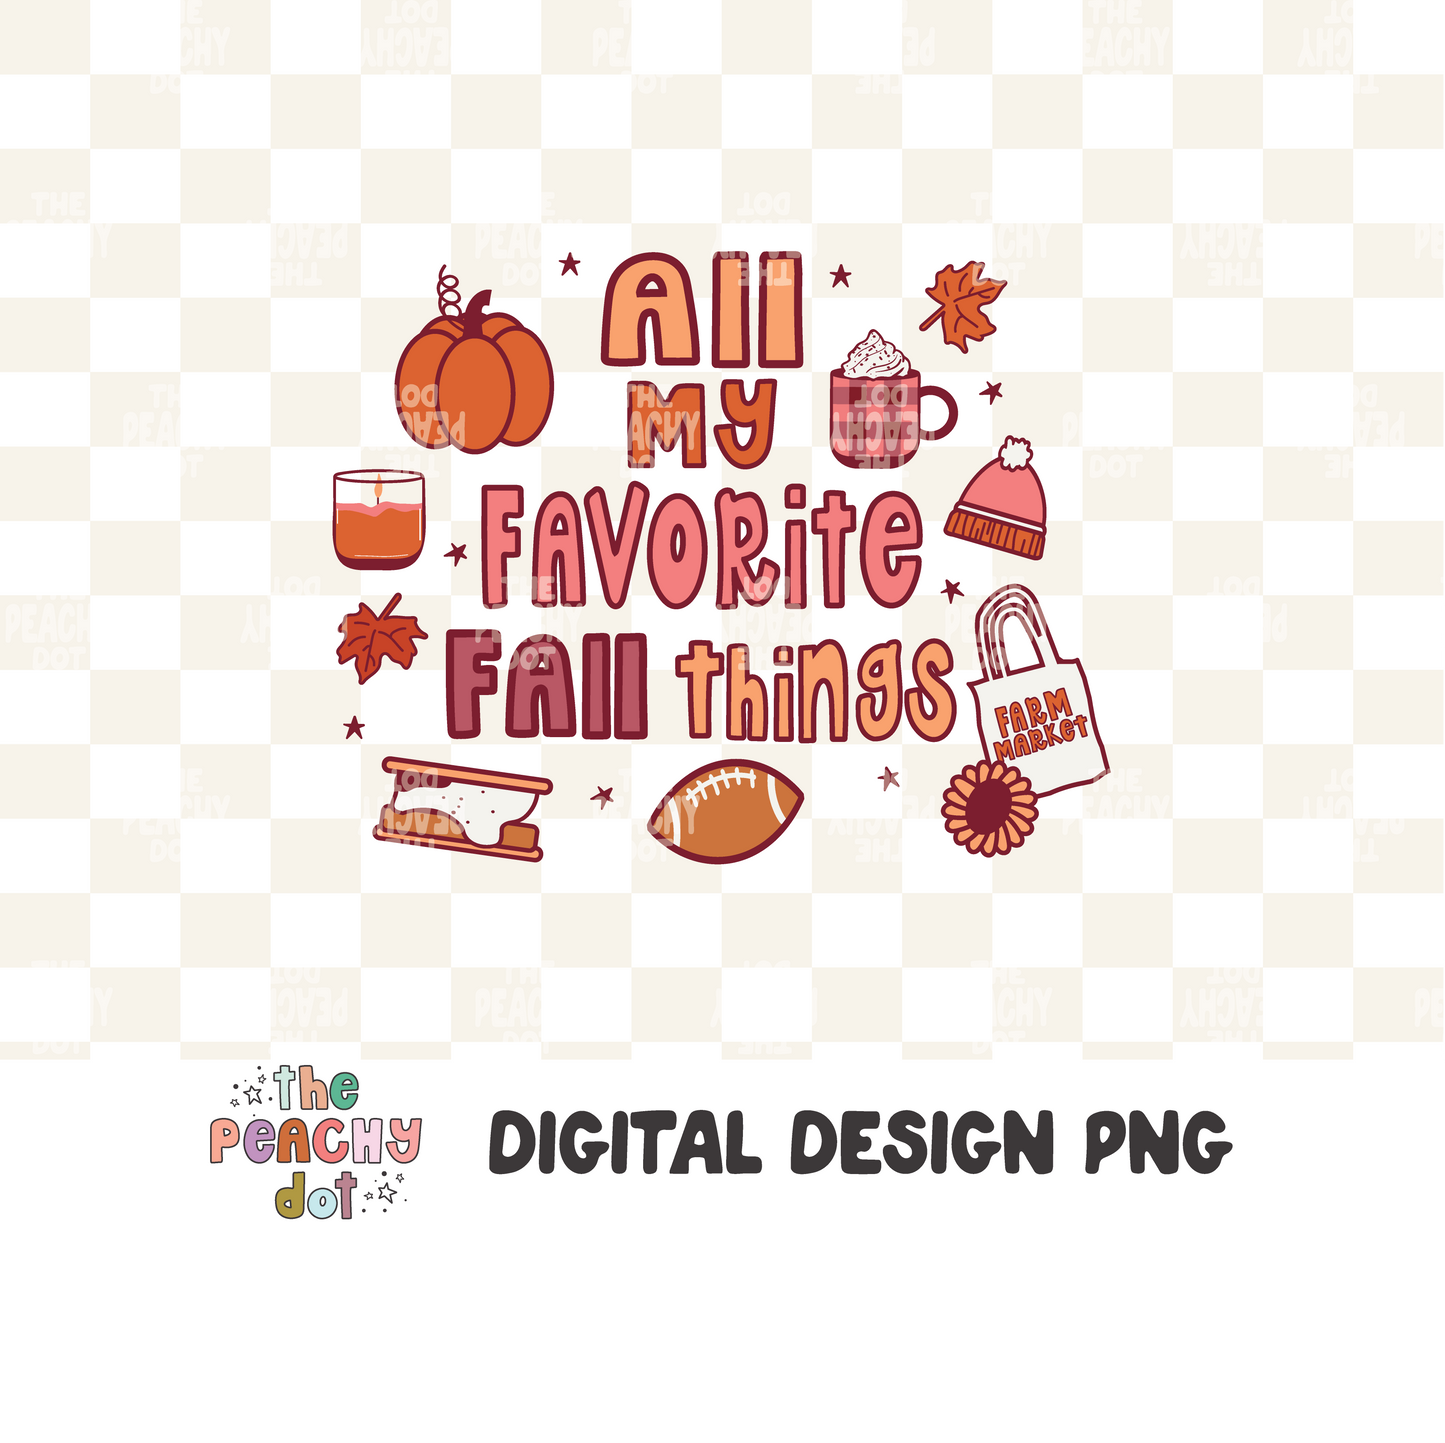 Favorite Fall Things Png